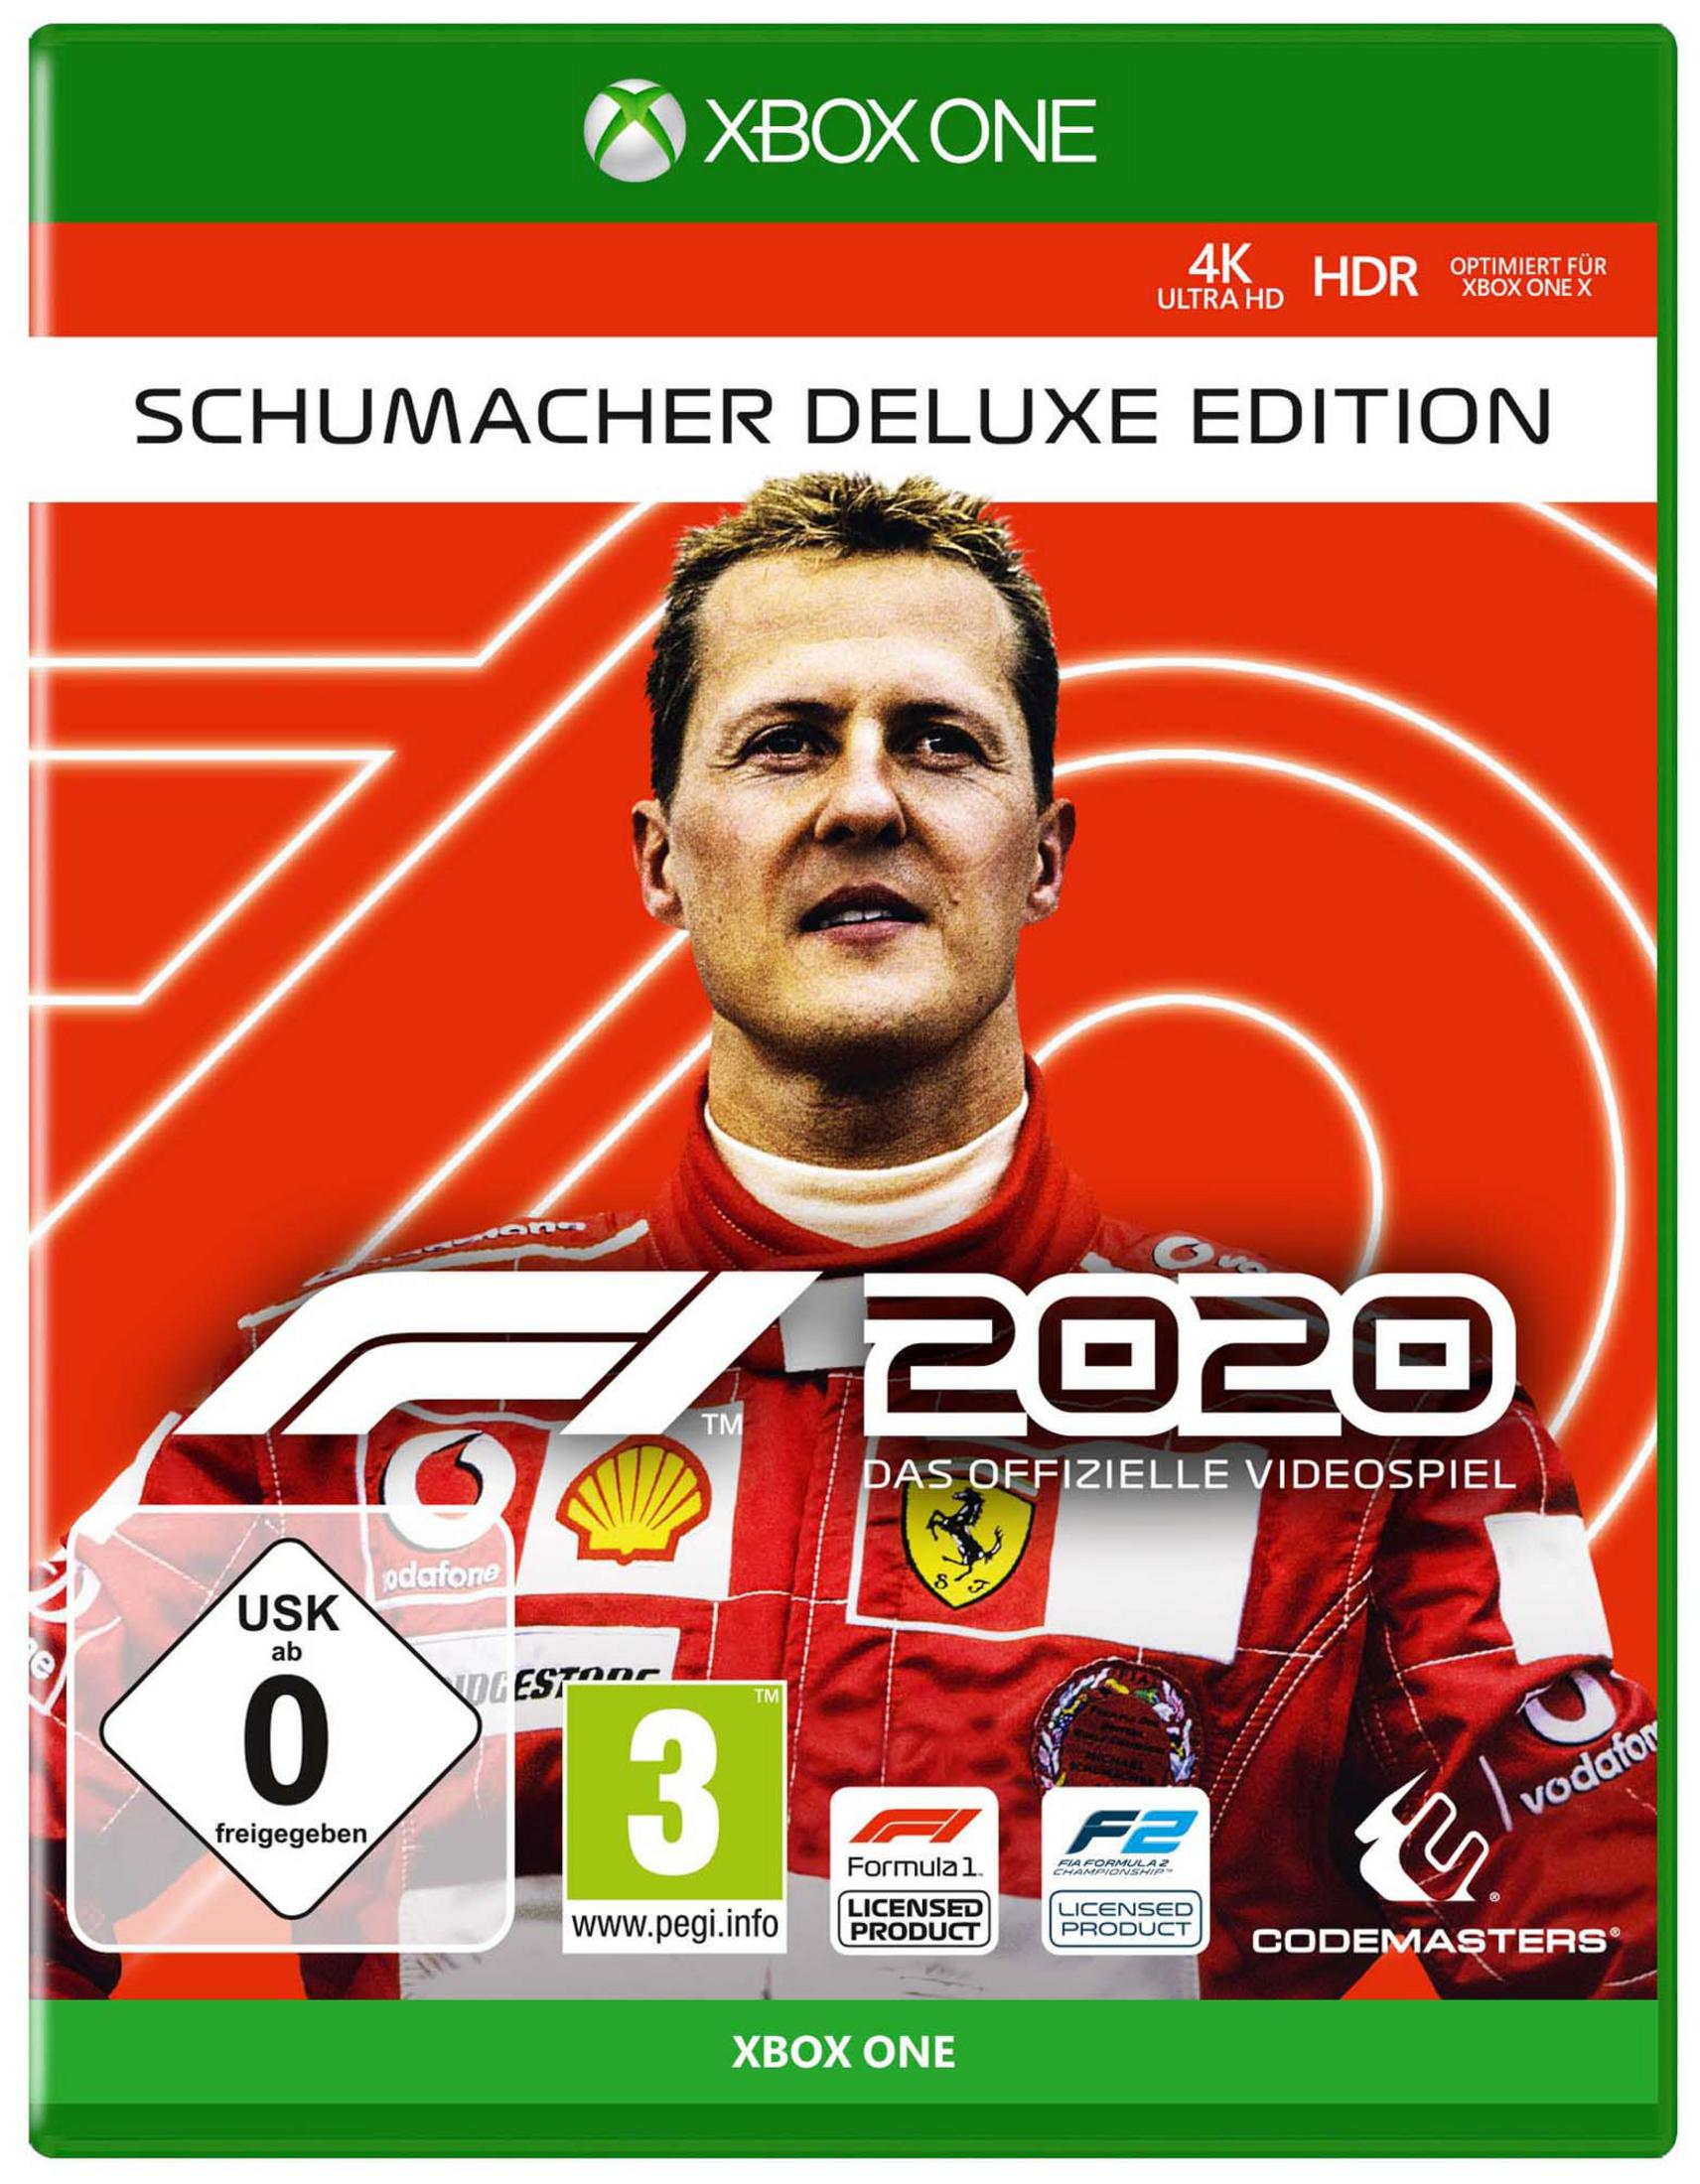 Schumacher [Xbox Deluxe Edition One] - 2020 F1